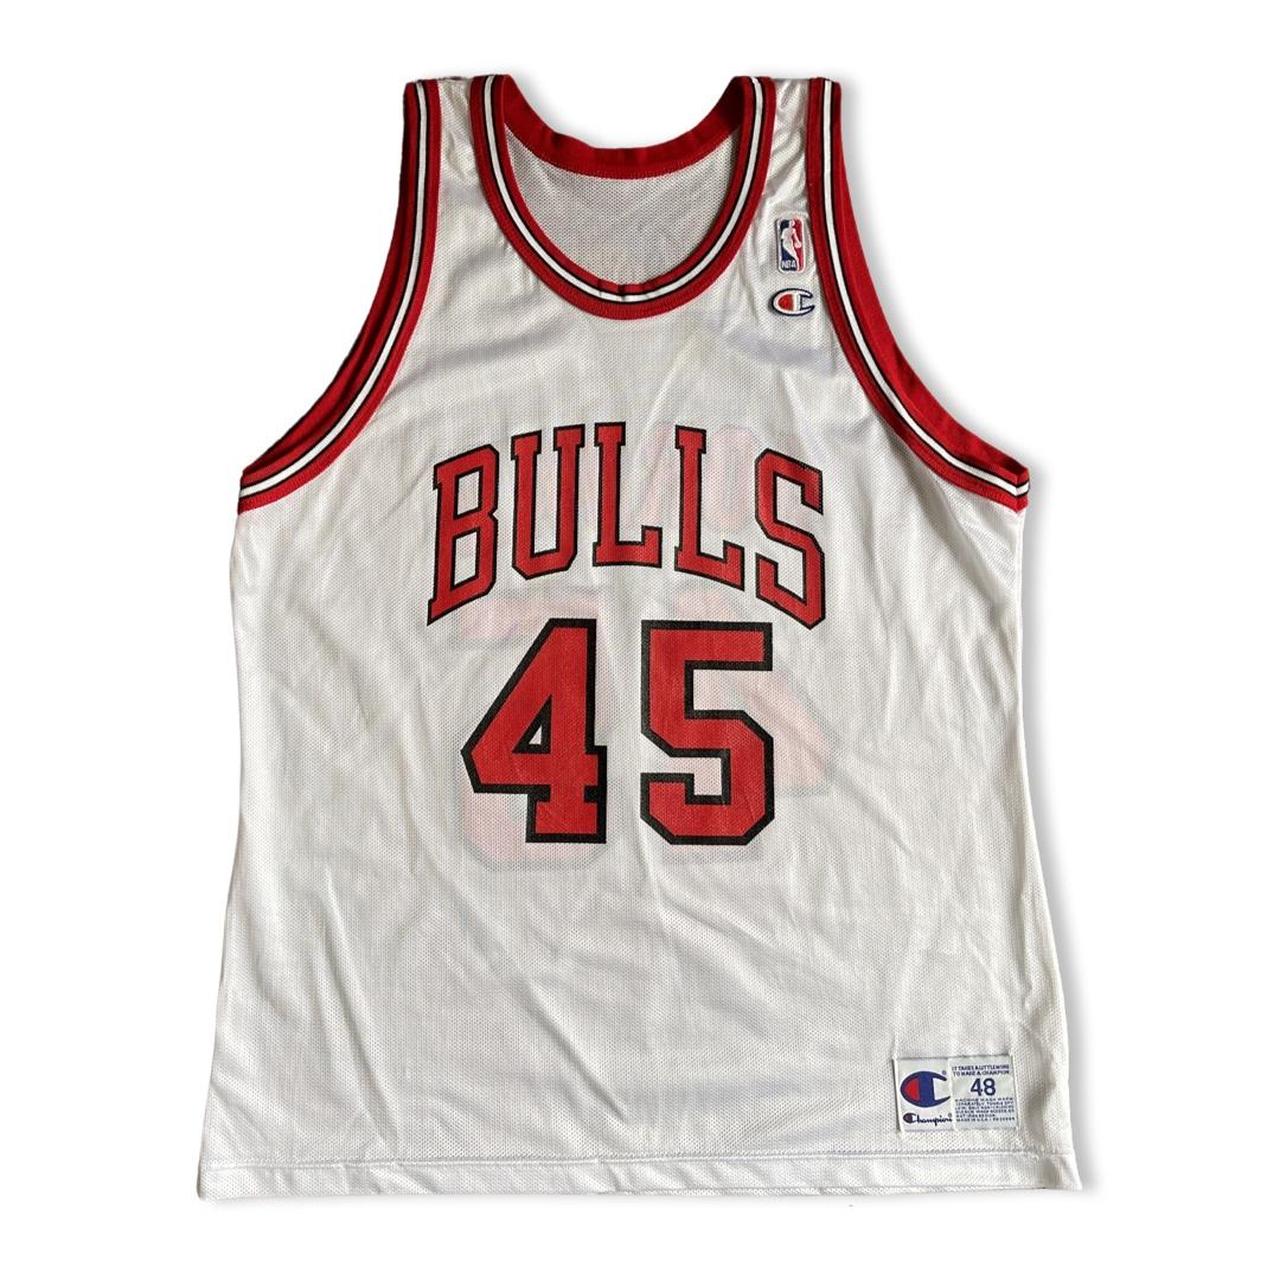 Vintage Champion Michael Jordan Chicago Bulls Jersey Size 48 Red